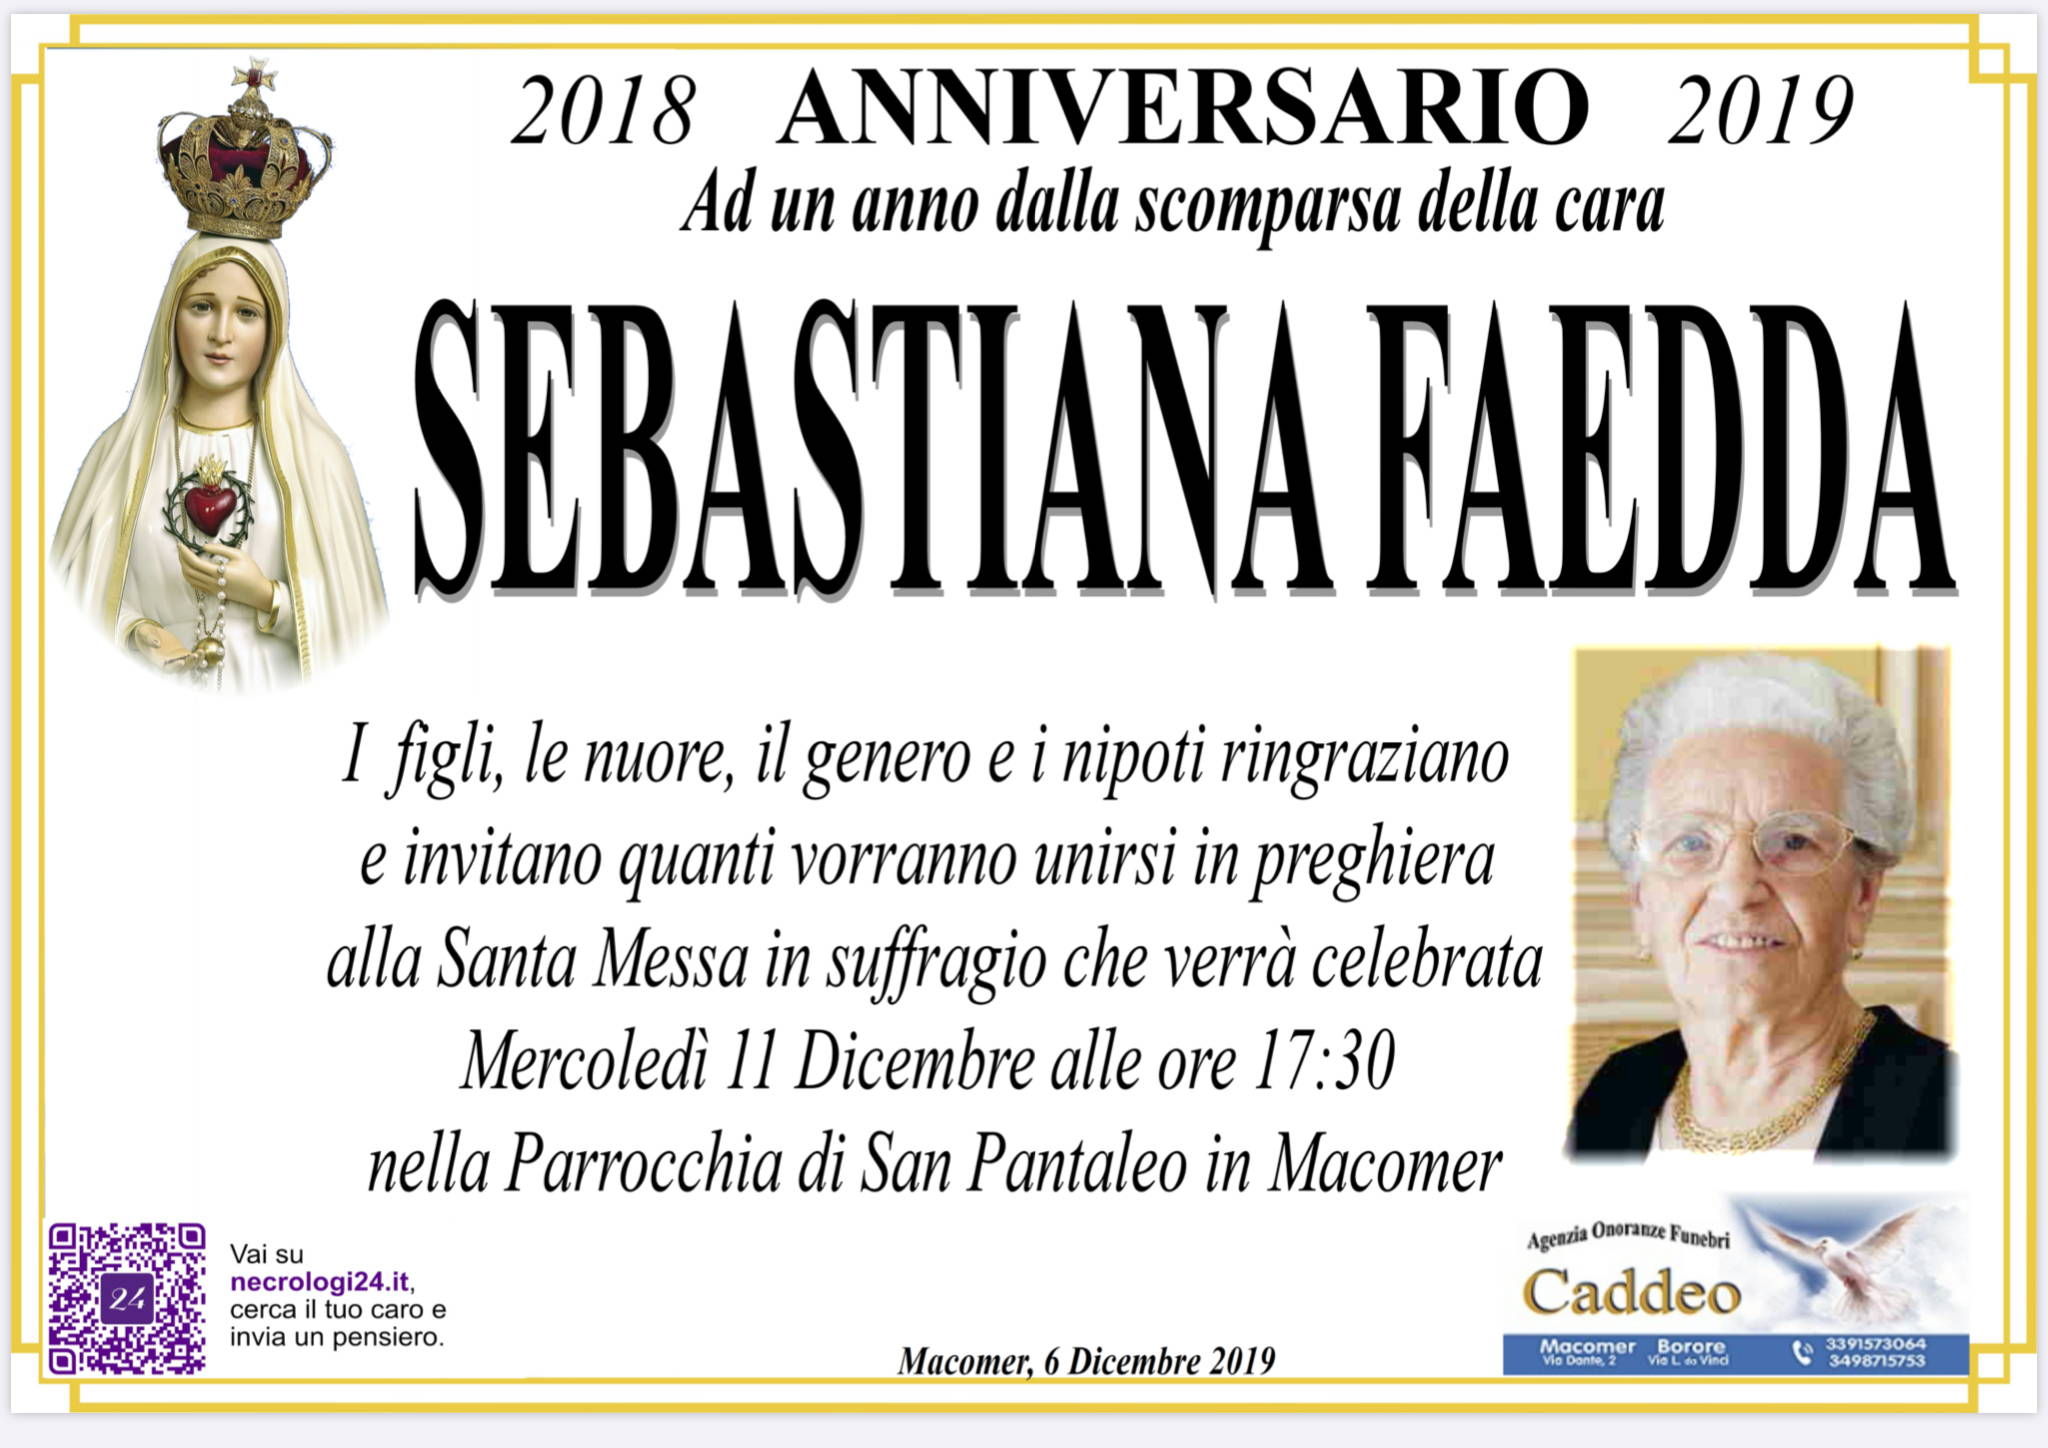 Sebastiana Faedda